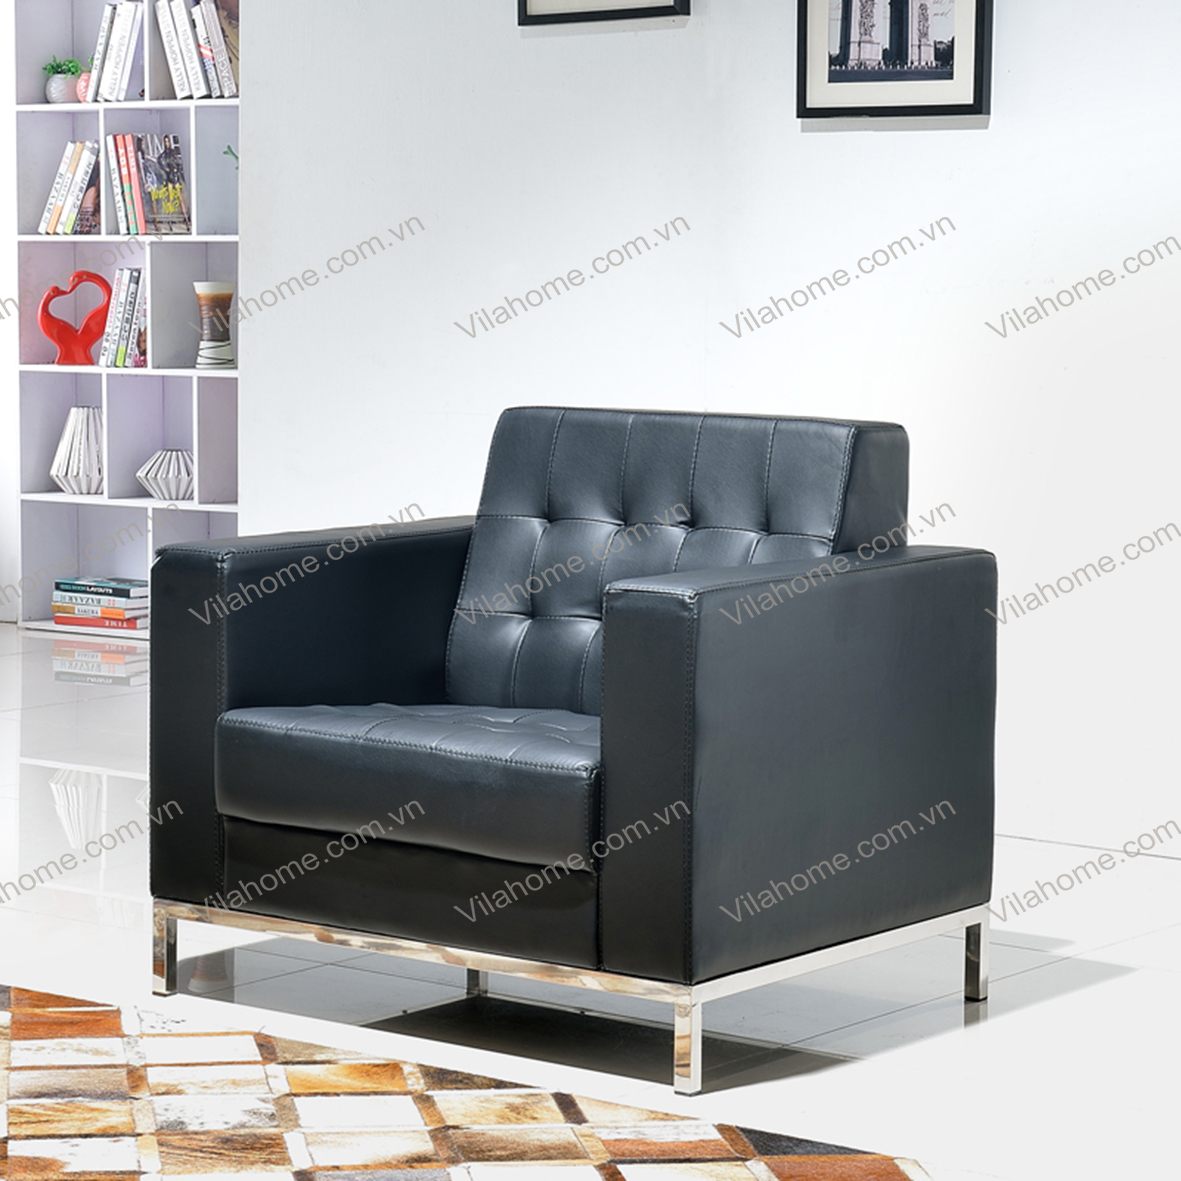 Sofa văn phòng-sofa van phong